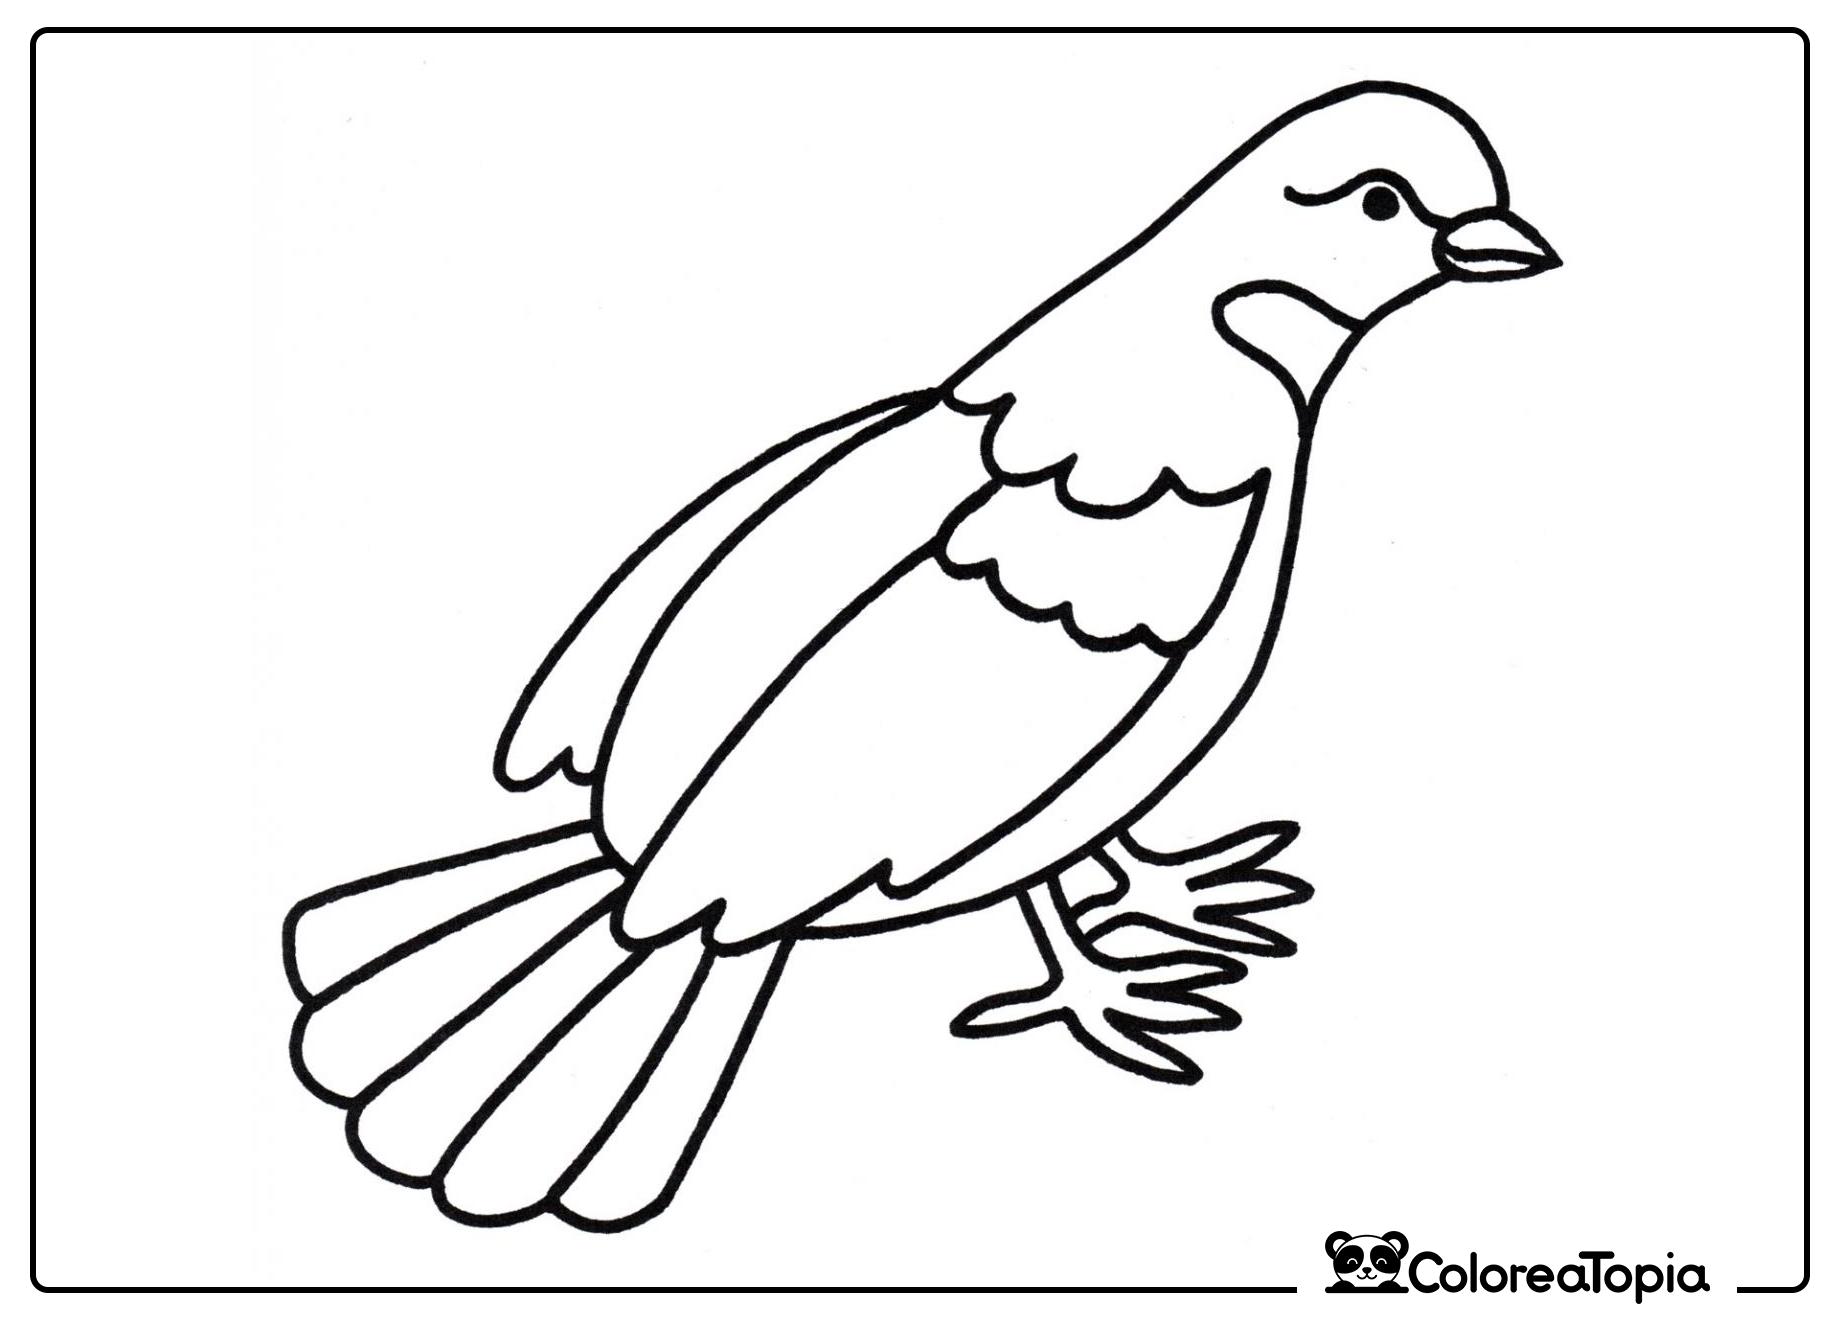 La paloma busca comida - dibujo para colorear